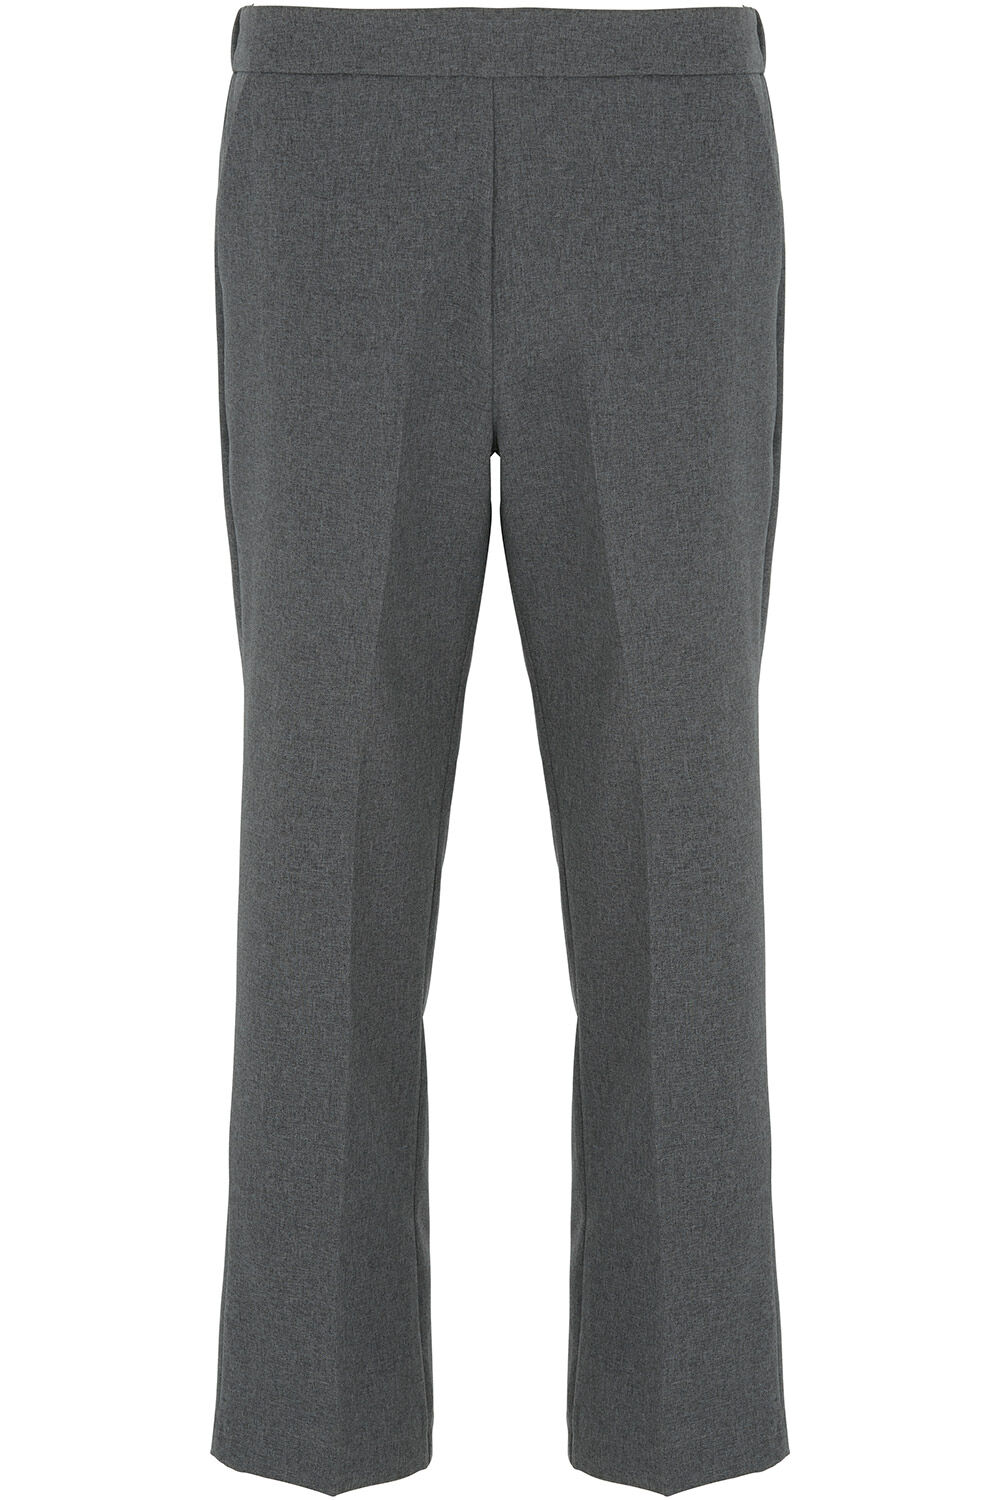 Bonmarche Plain Straight Leg Trouser - Grey, Size: 22